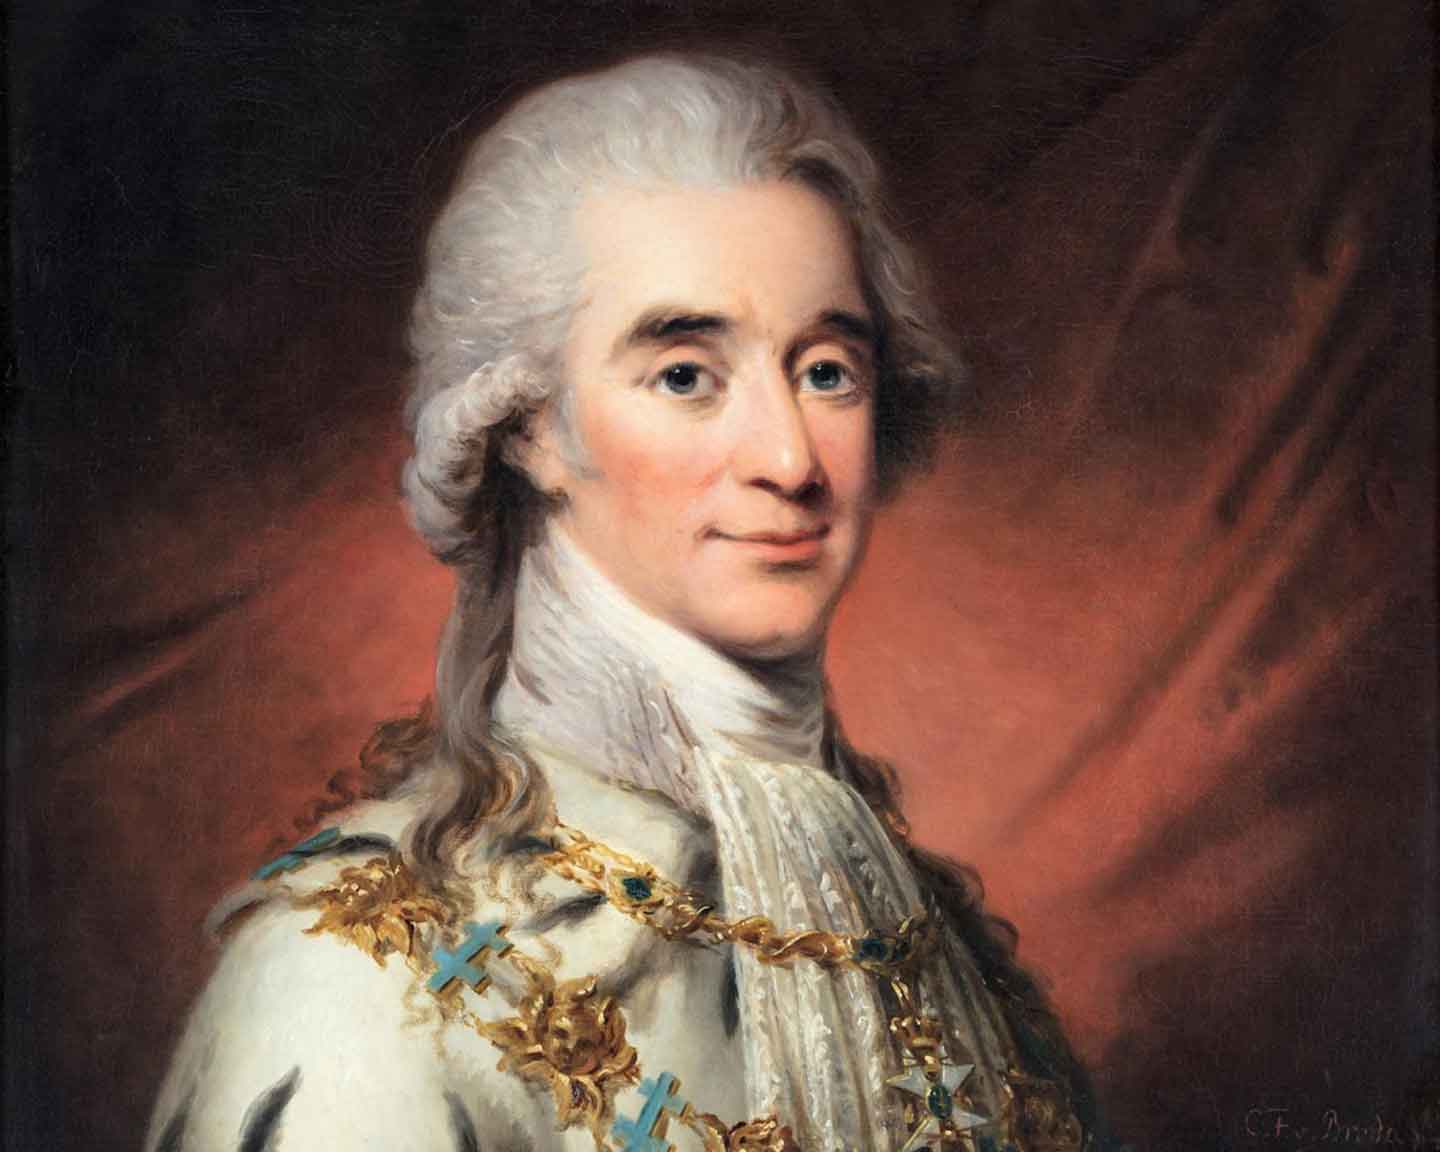 Аксель фон Ферзен, 1799 г. Карл фон Бреда.